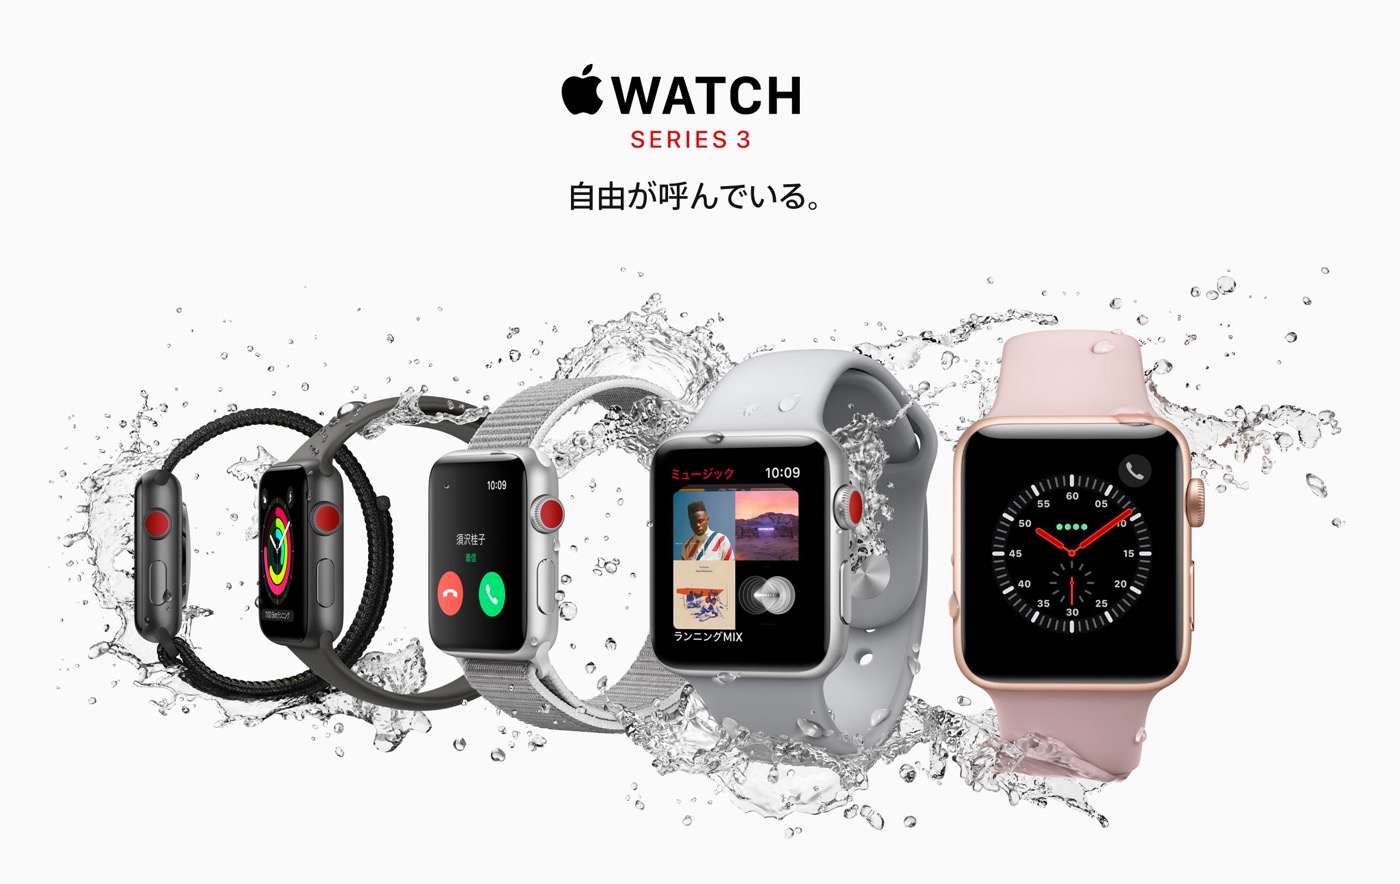 ｢Apple Watch Series 3｣のバッテリー駆動時間、4G LTEを利用した連続通話時間は1時間以上